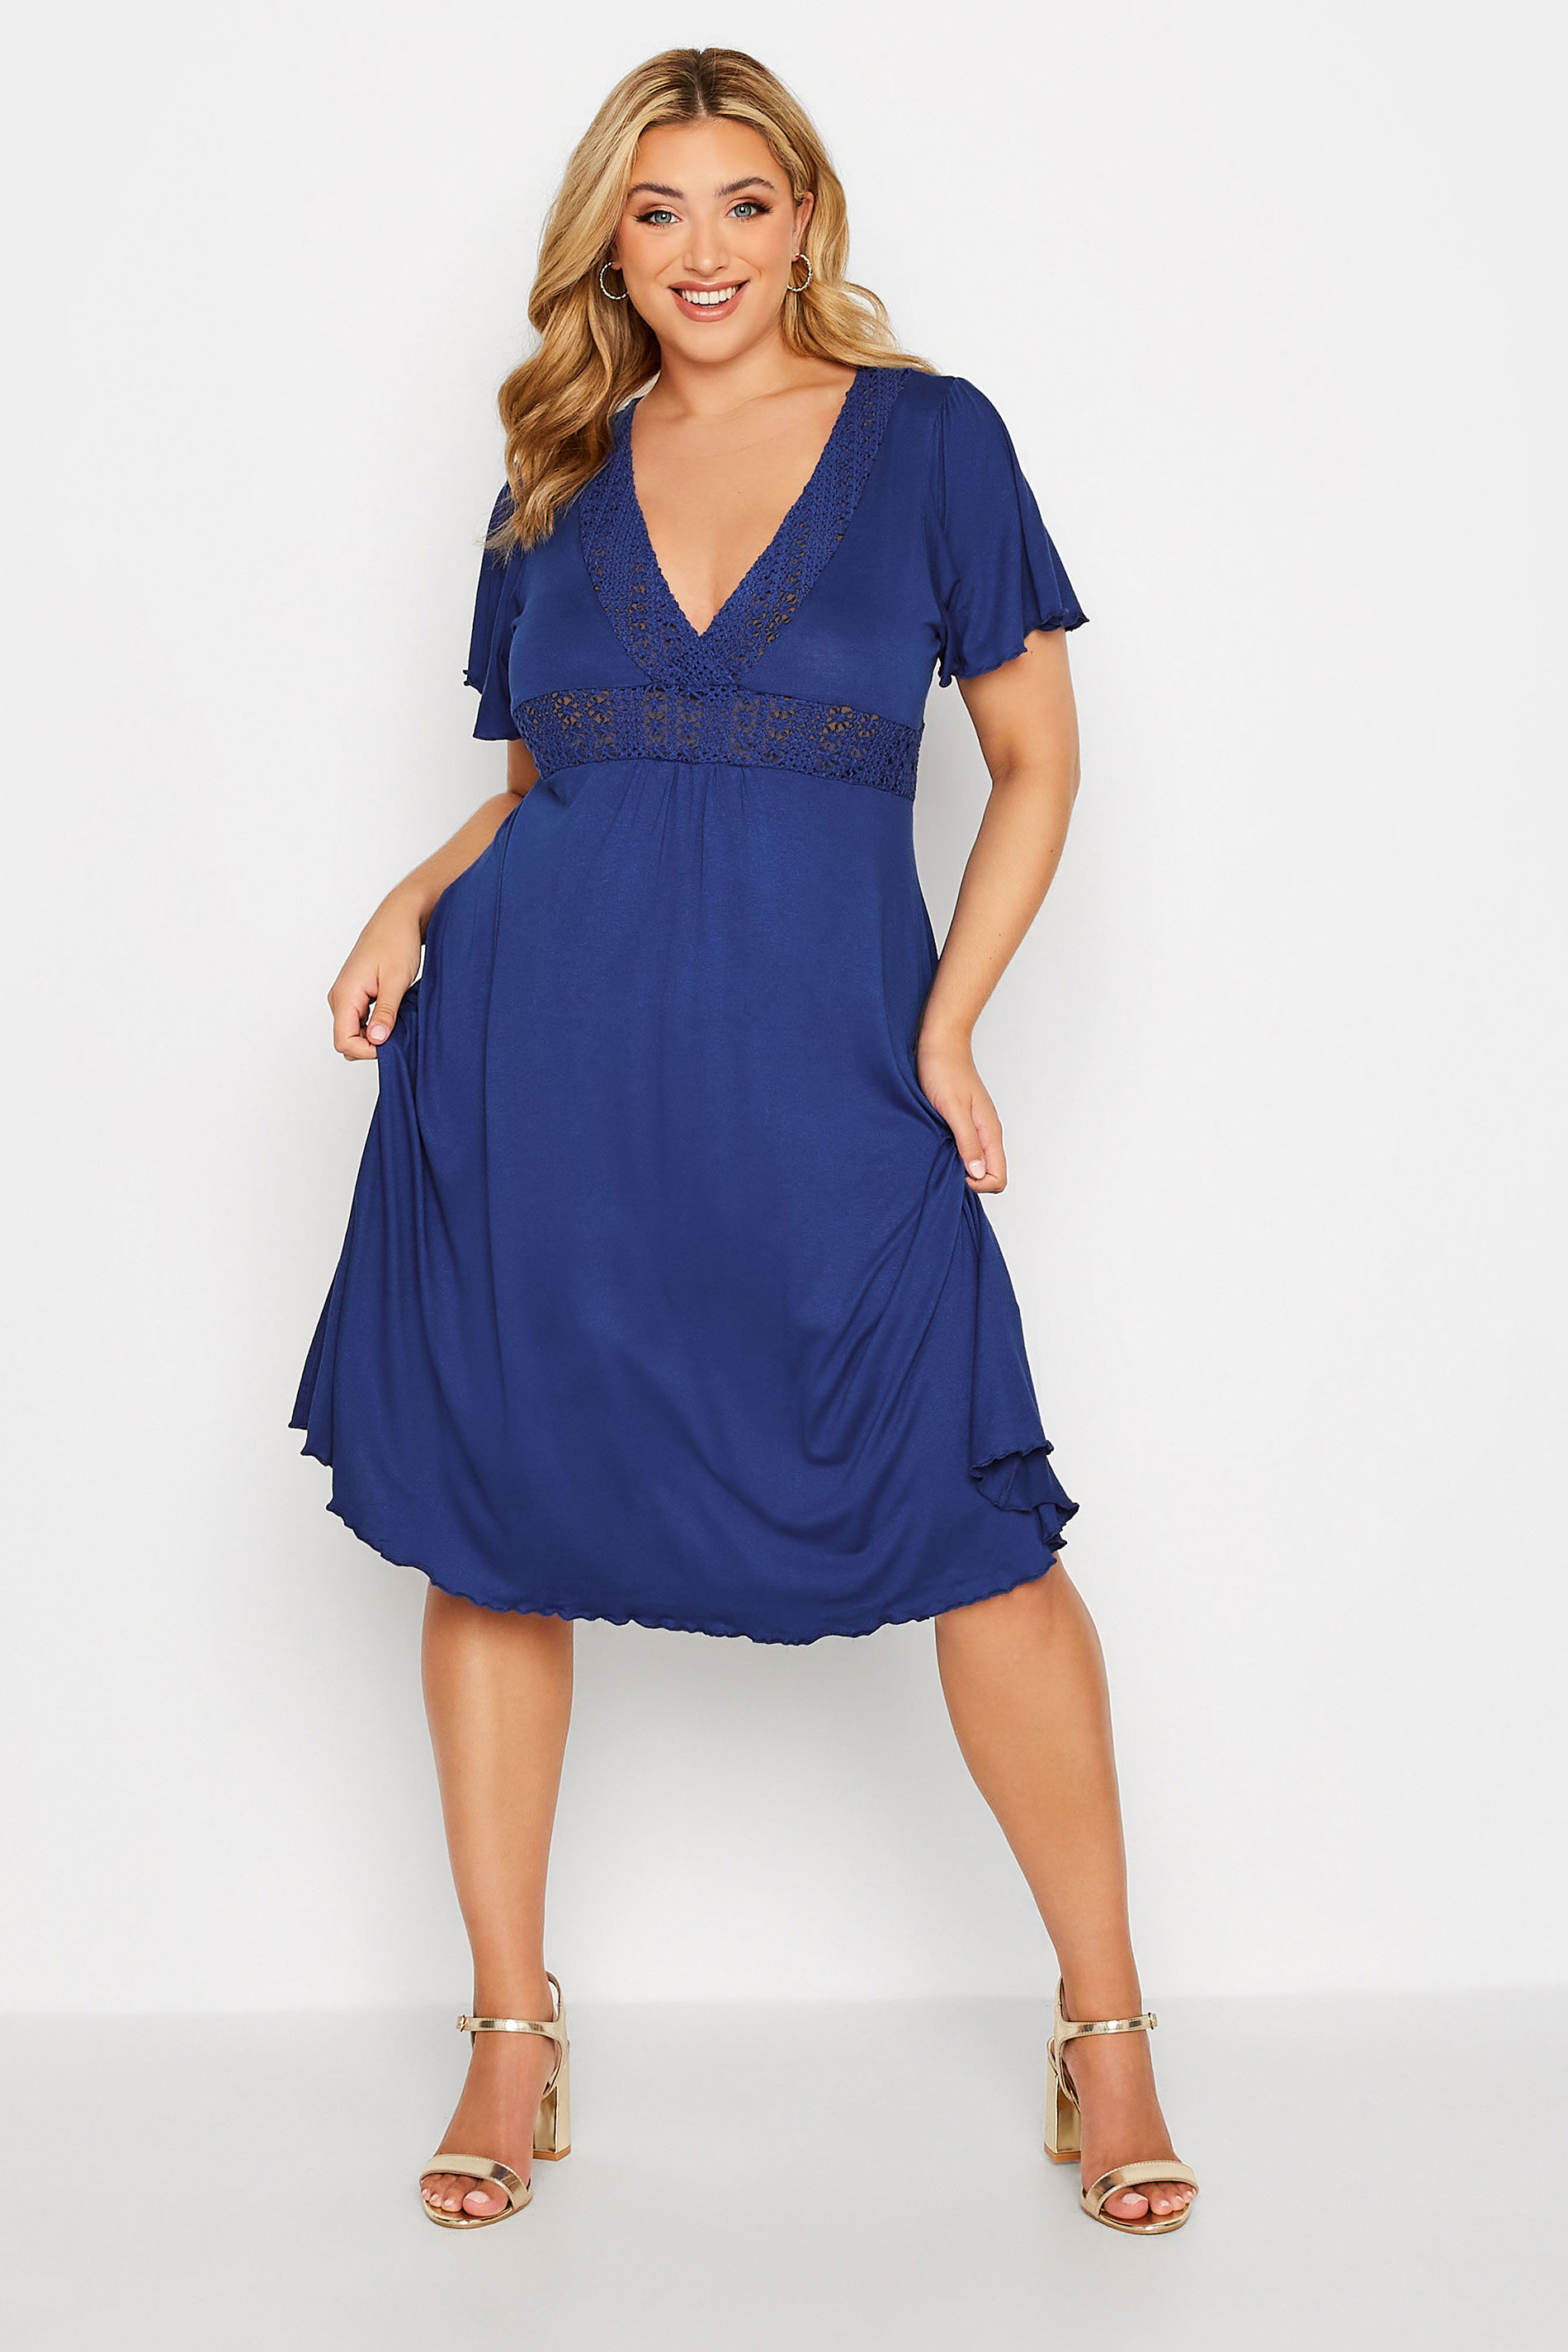 YOURS Plus Size Blue Crochet Detail Dress | Yours Clothing  2